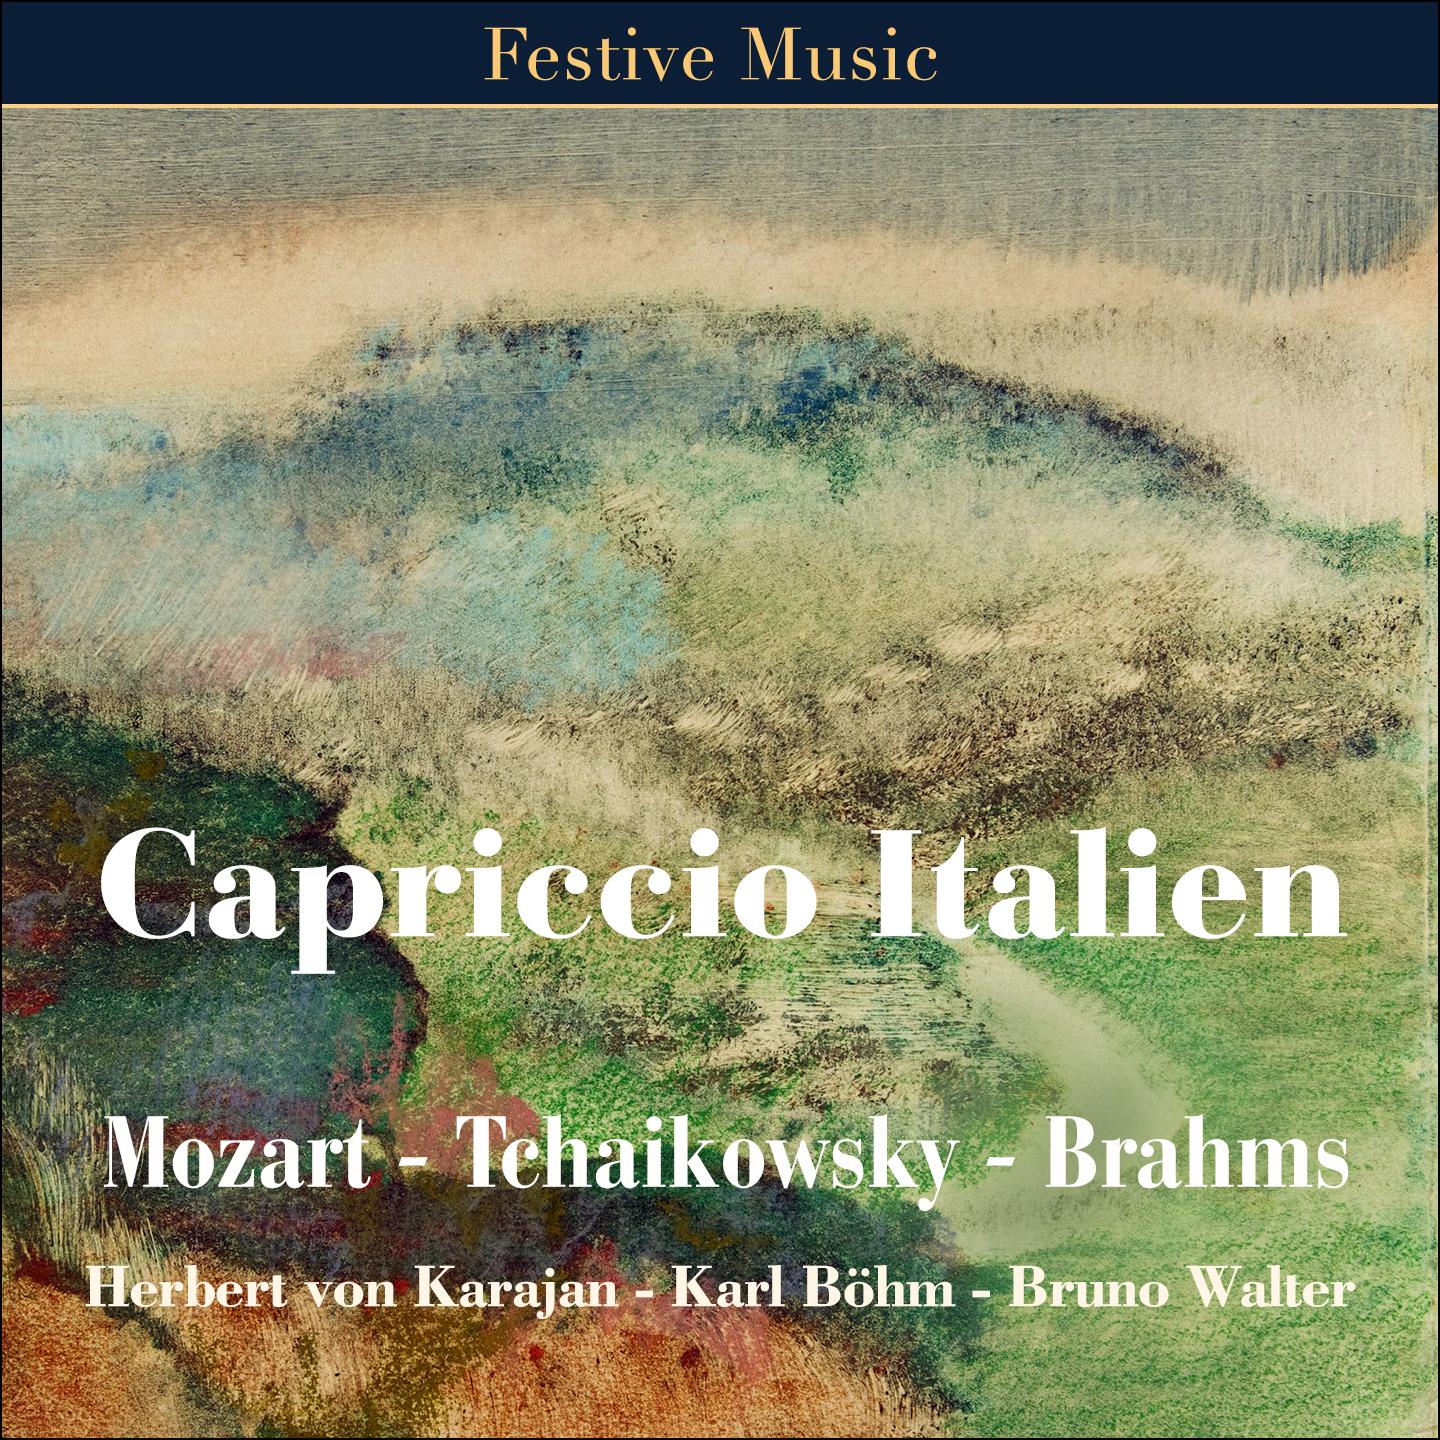 Capriccio Italien in A Major, Op. 45